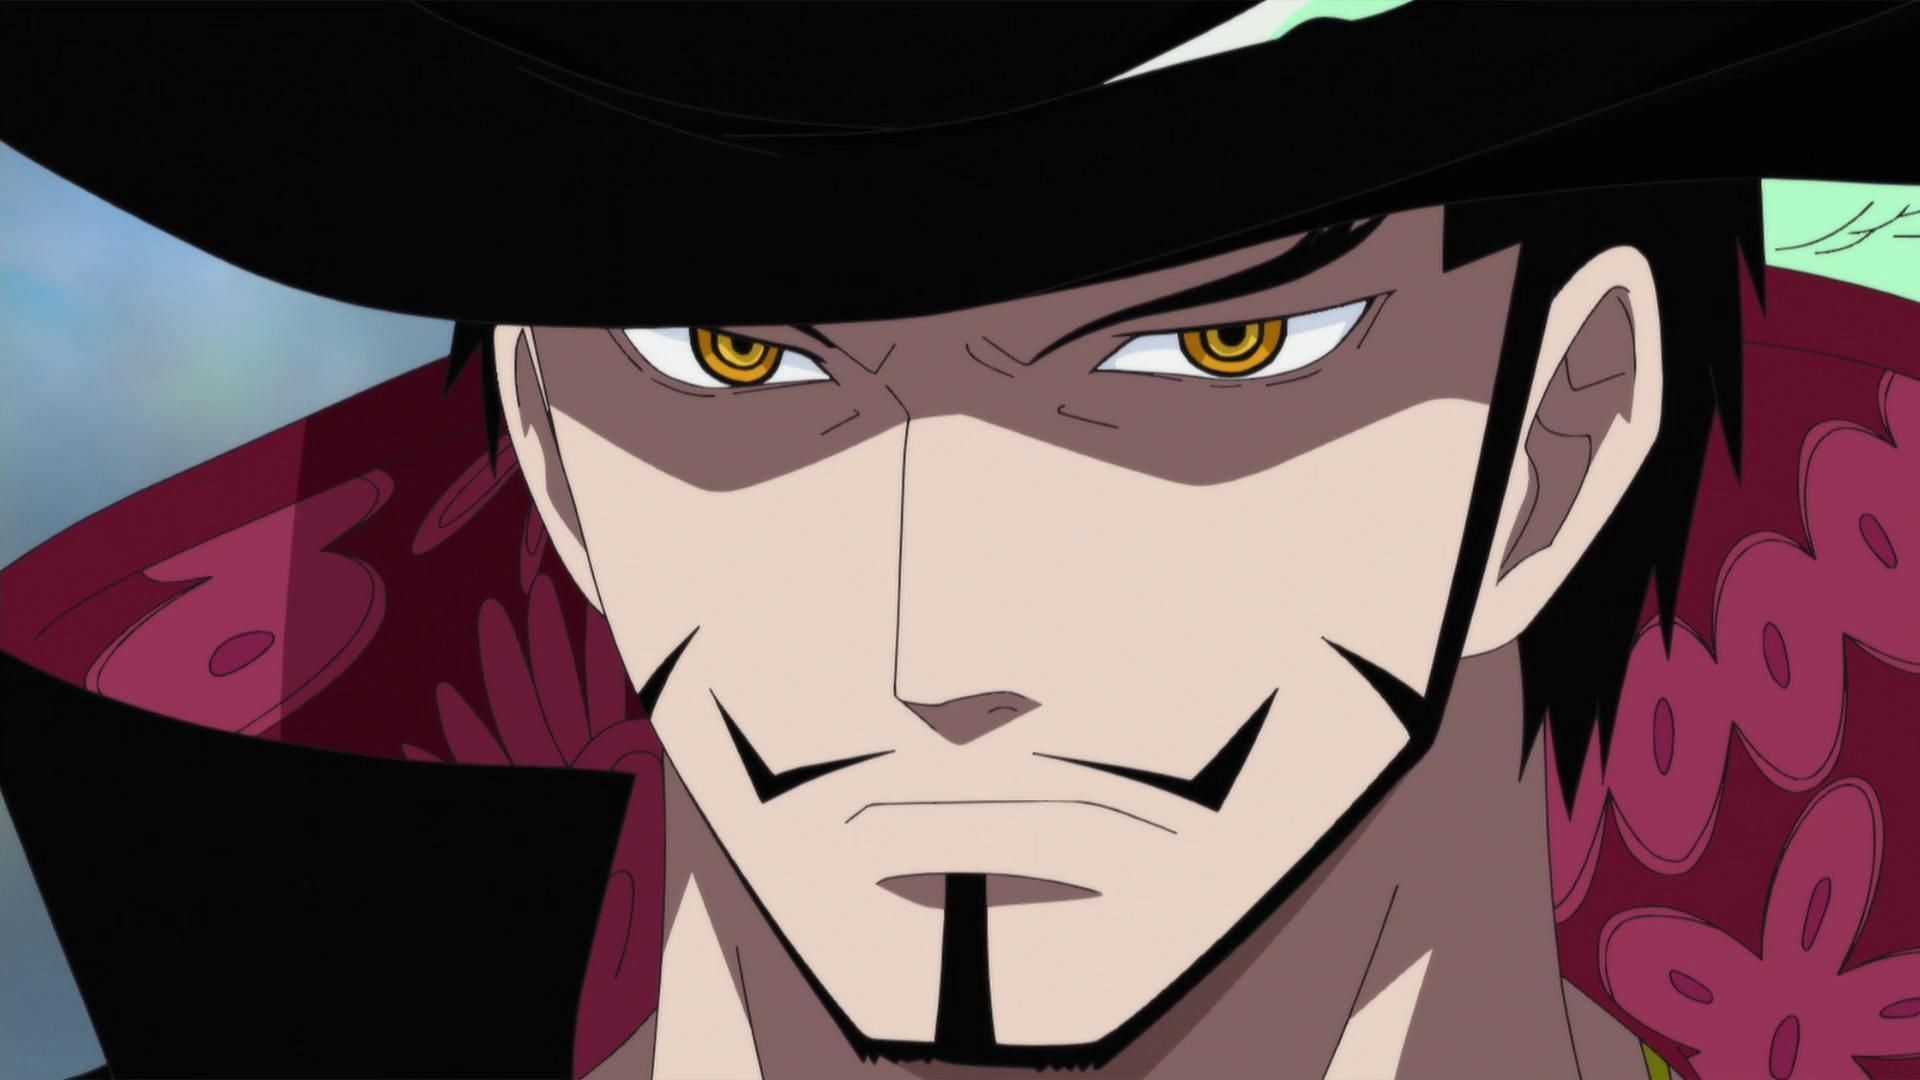 Dracule Mihawk, the World's Strongest Swordsman (Image via Toei Animation, One Piece)